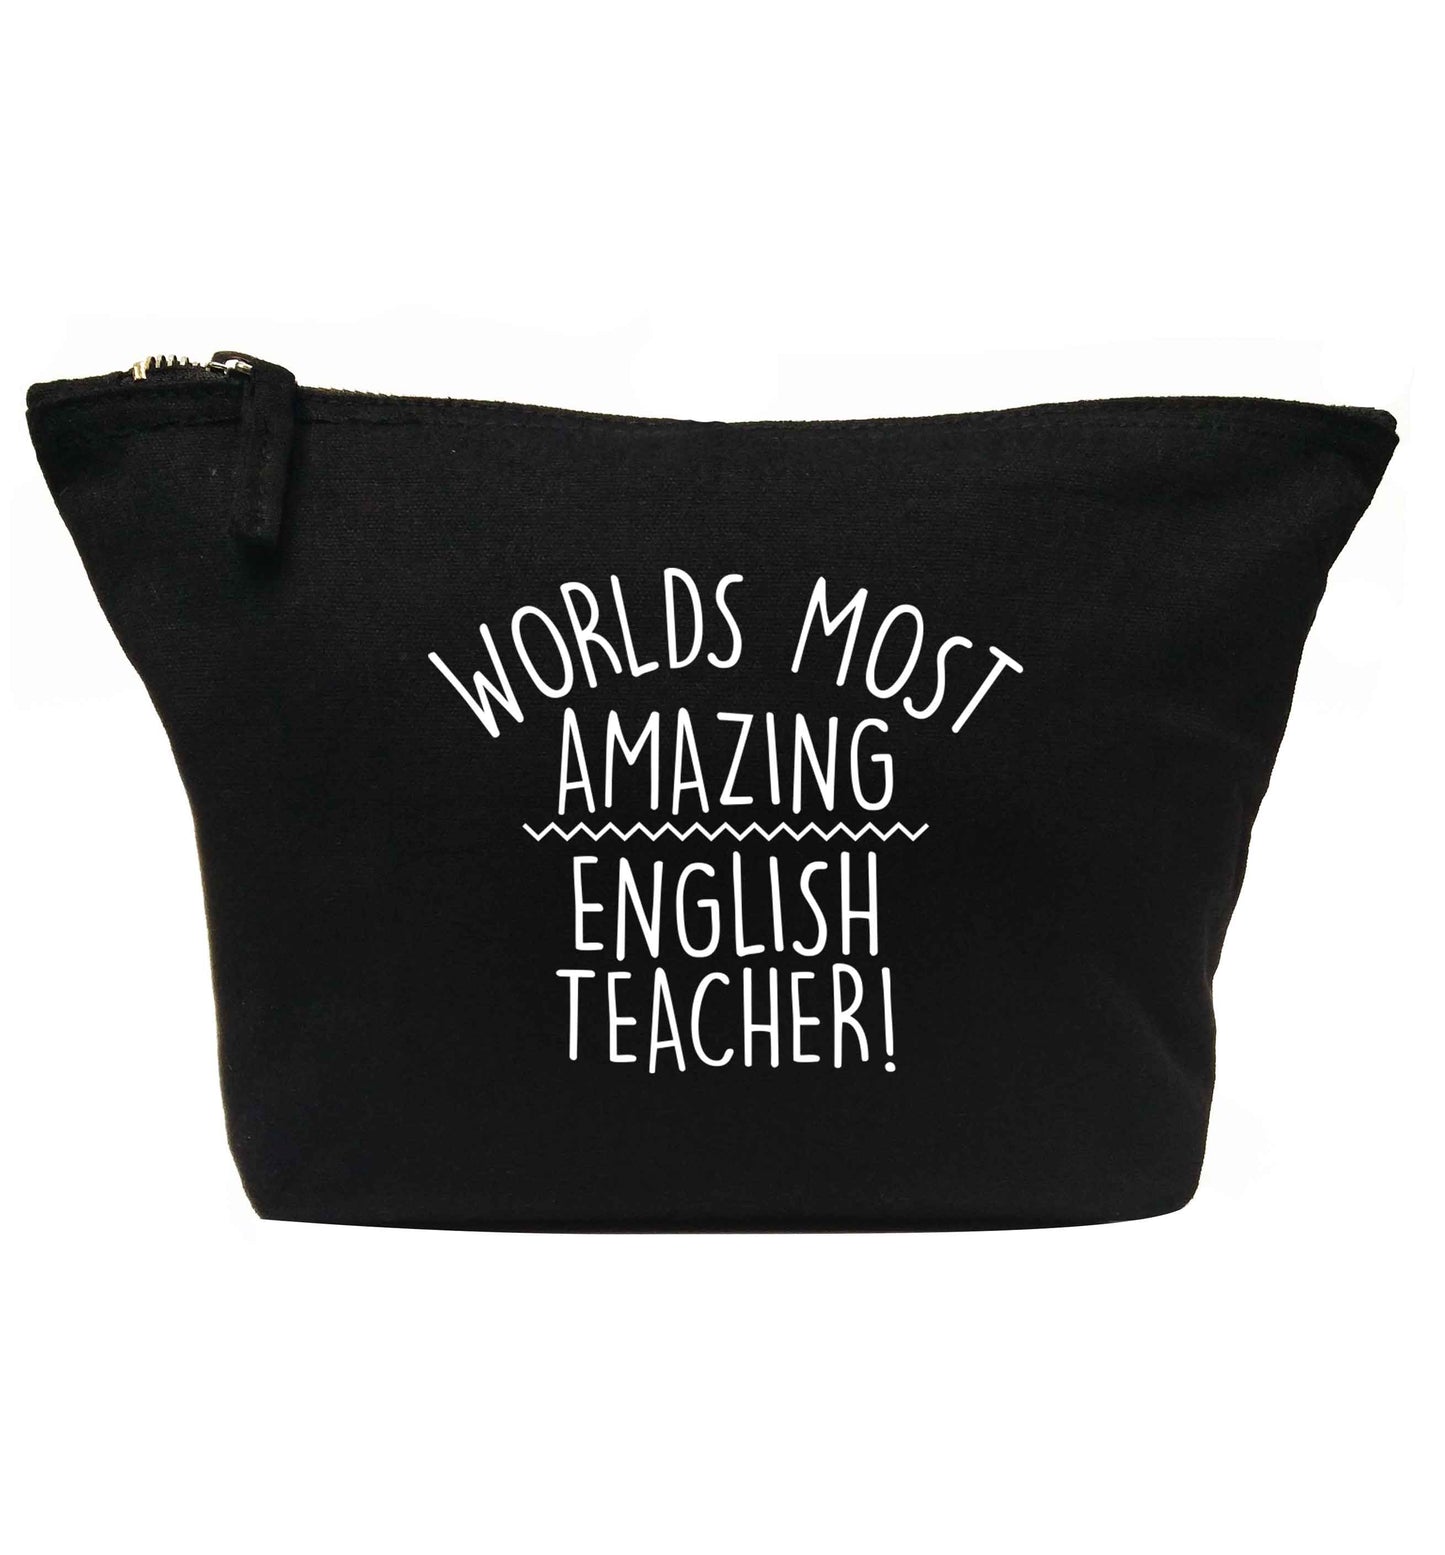 Worlds most amazing English teacher | Makeup / wash bag